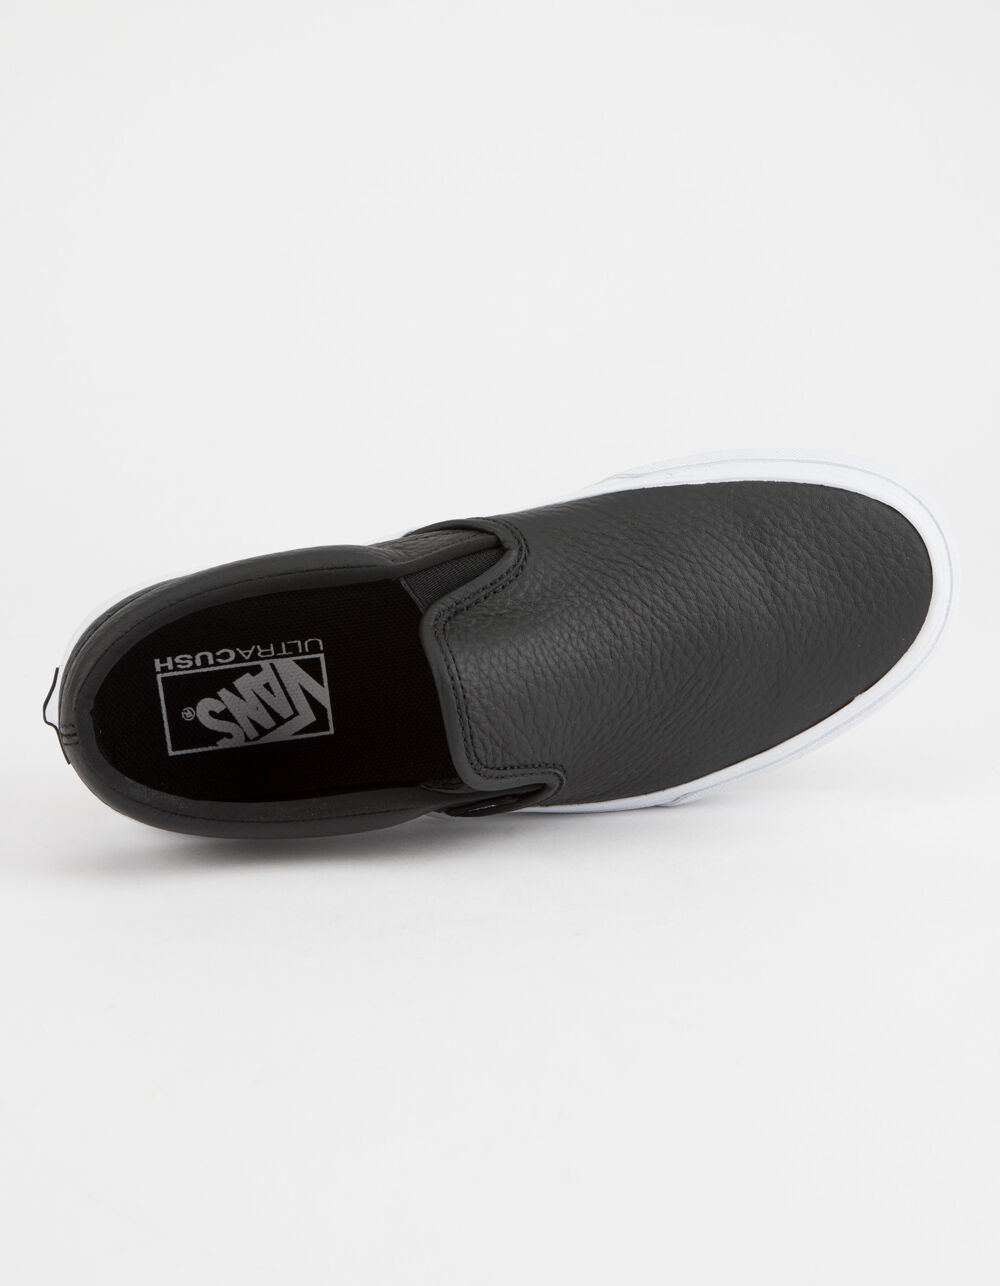 VANS Tumble Leather Black & True White Classic Slip-On Womens Shoes ...